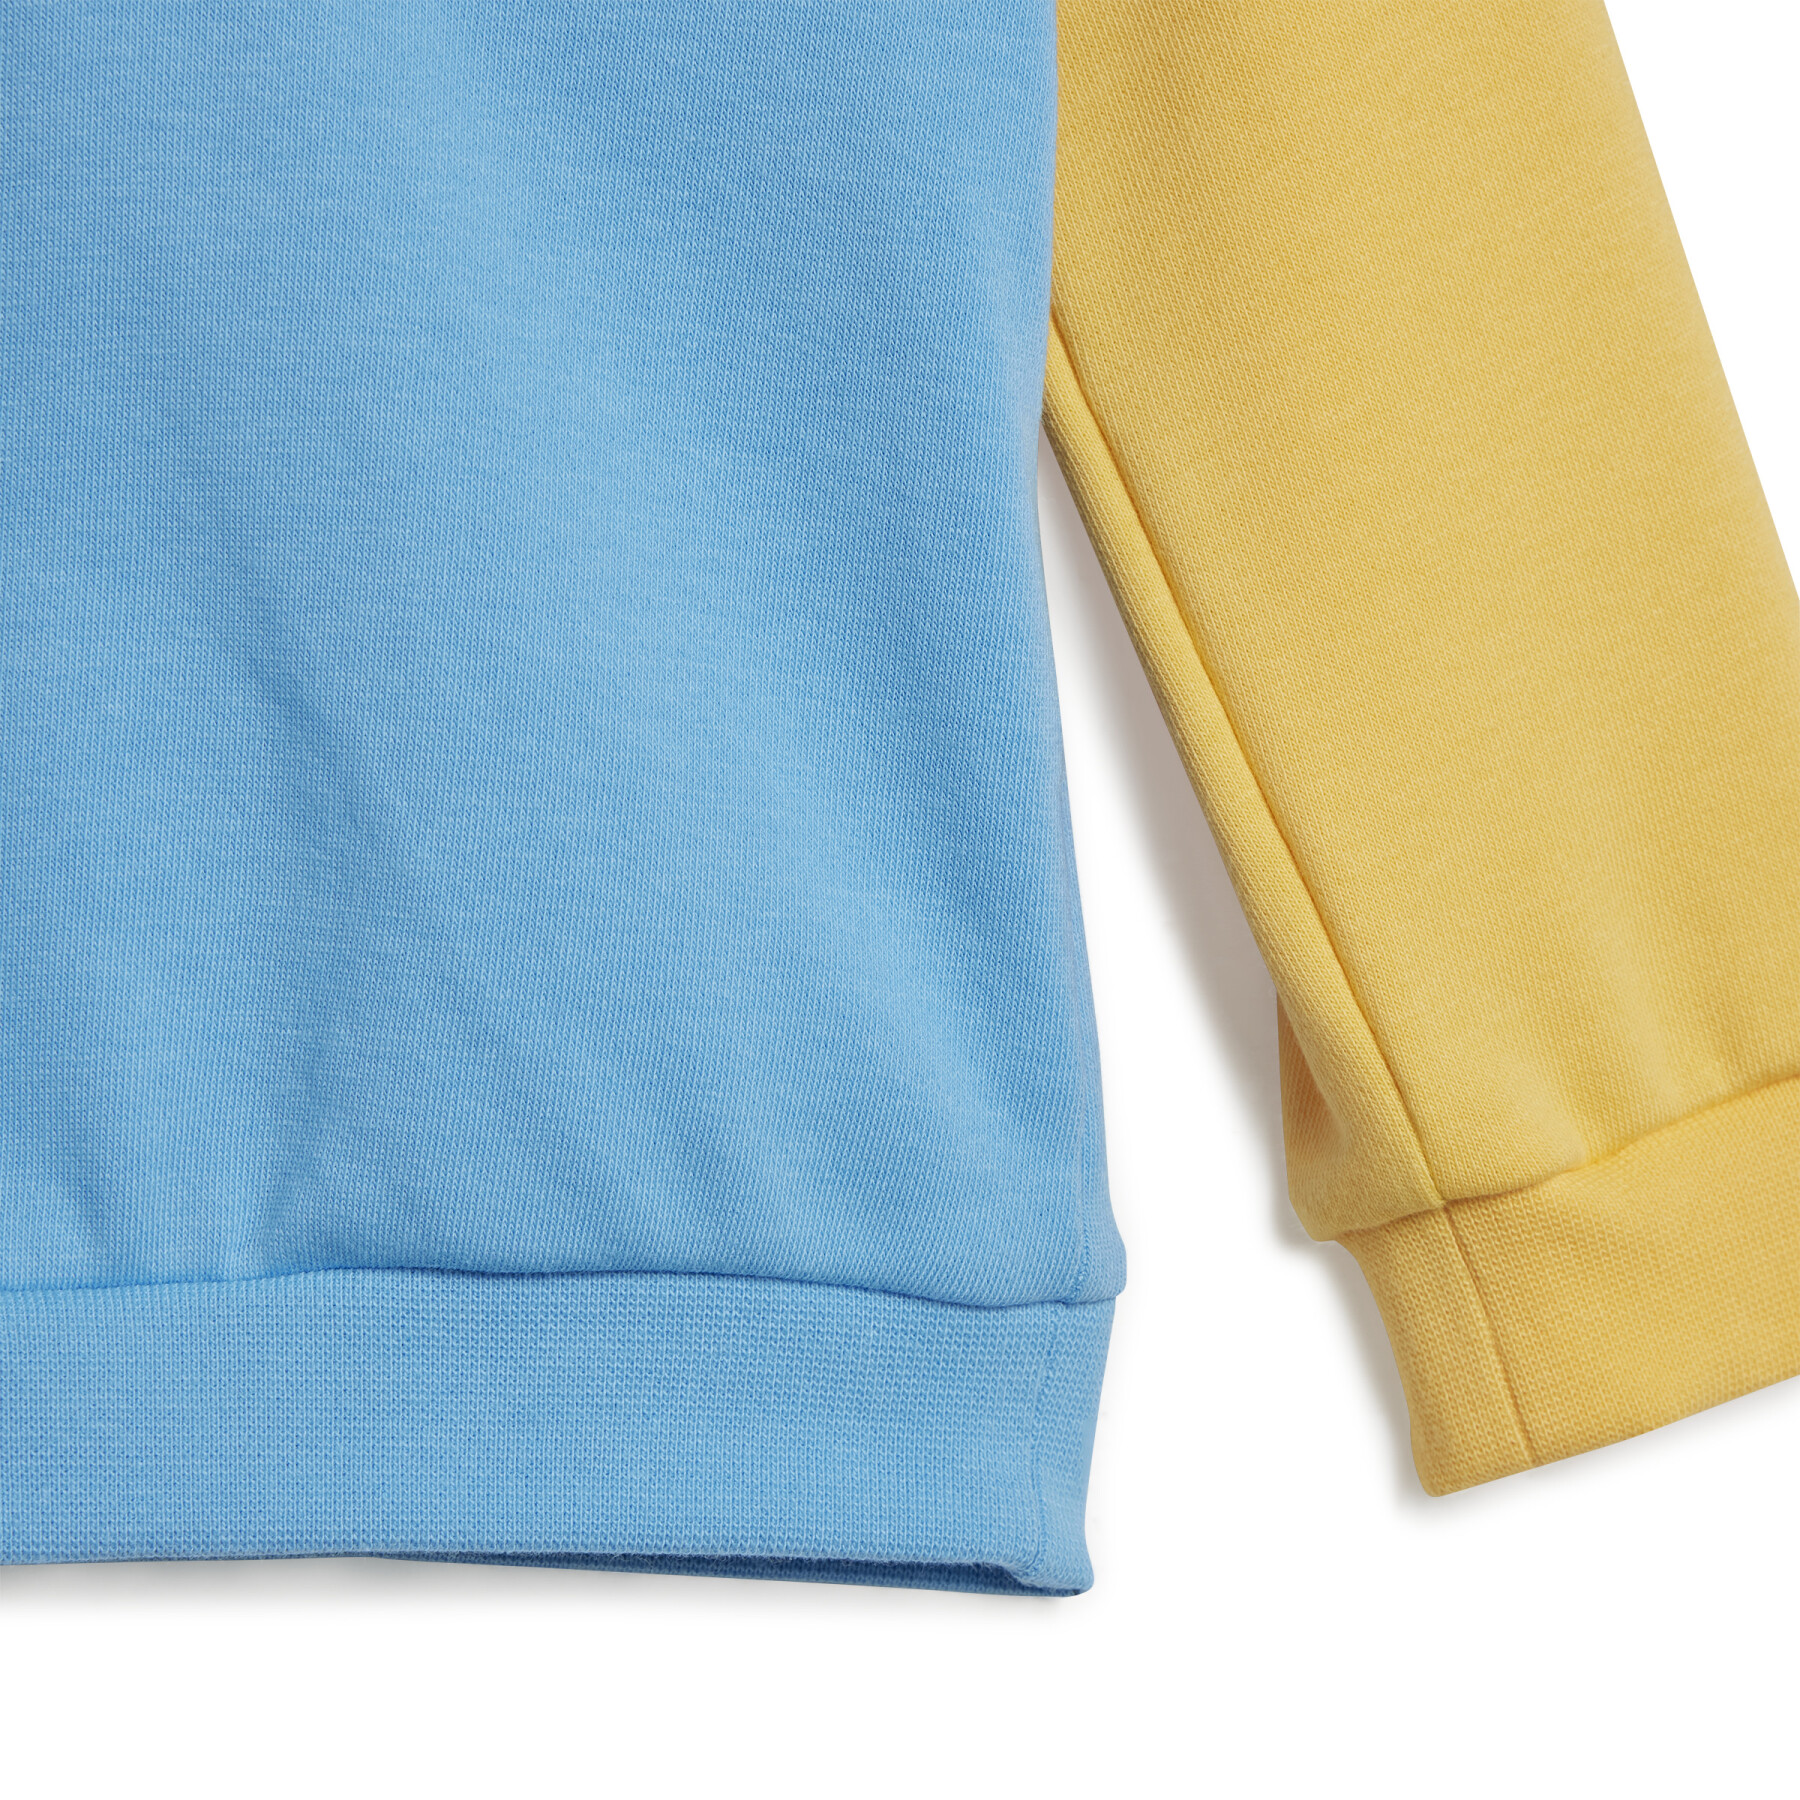 Set aus Sweatshirt und Jogginganzug, Baby adidas Essentials Colorblock